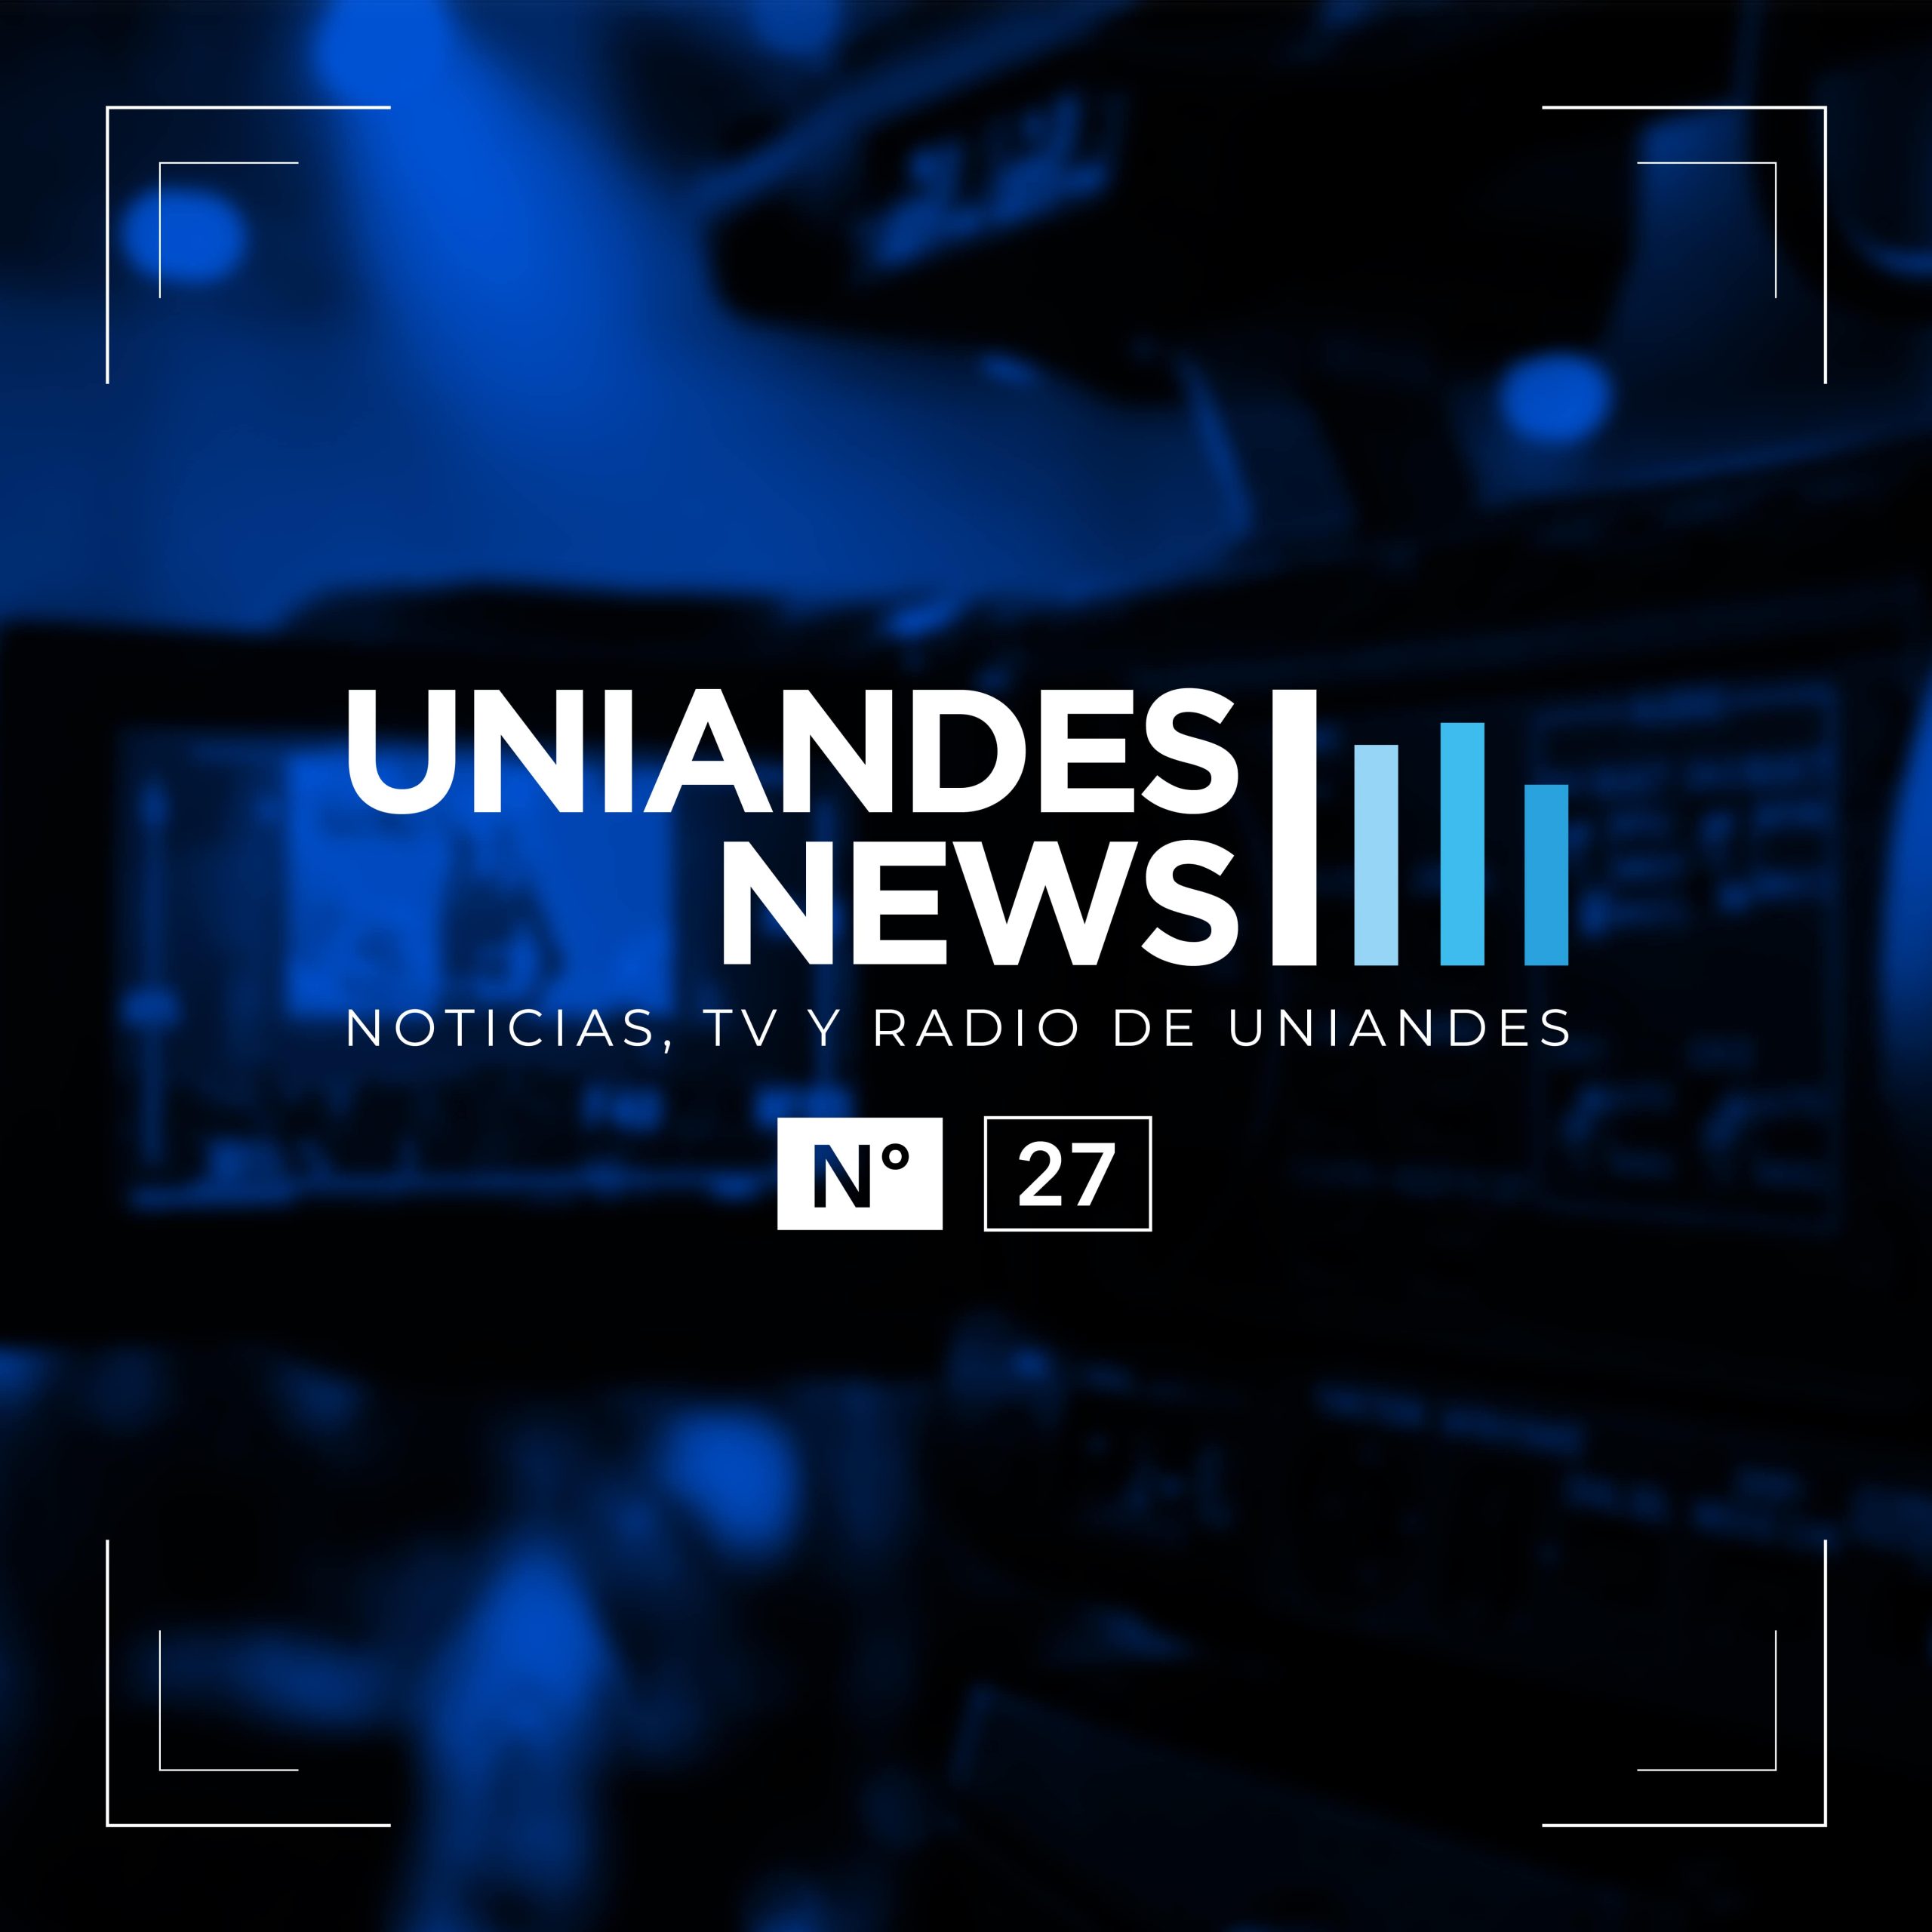 Uniandes news 27